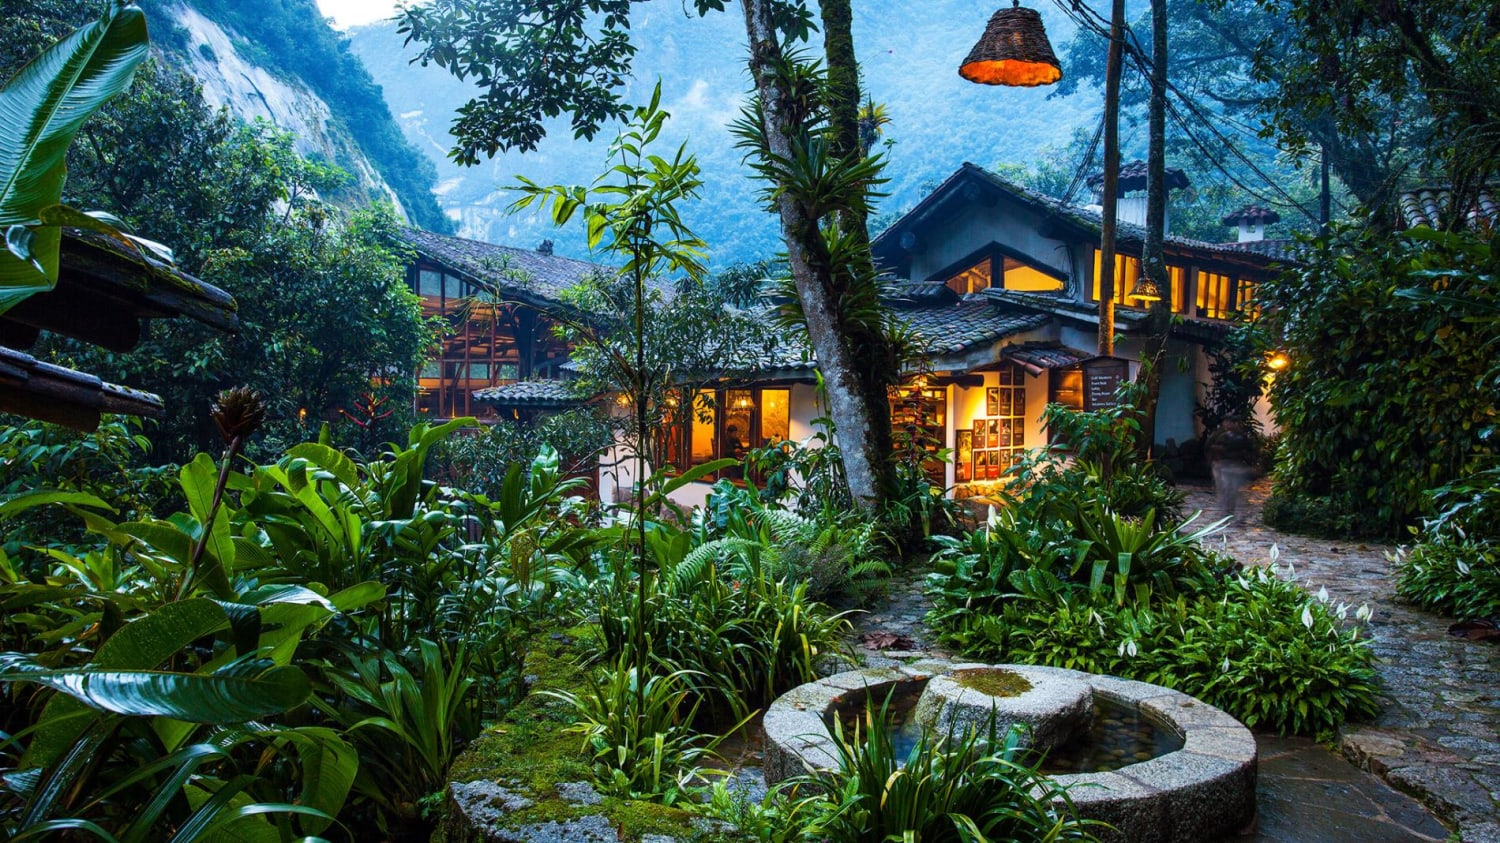 Visiting Machu Picchu? Don’t miss this stunning rain forest sanctuary